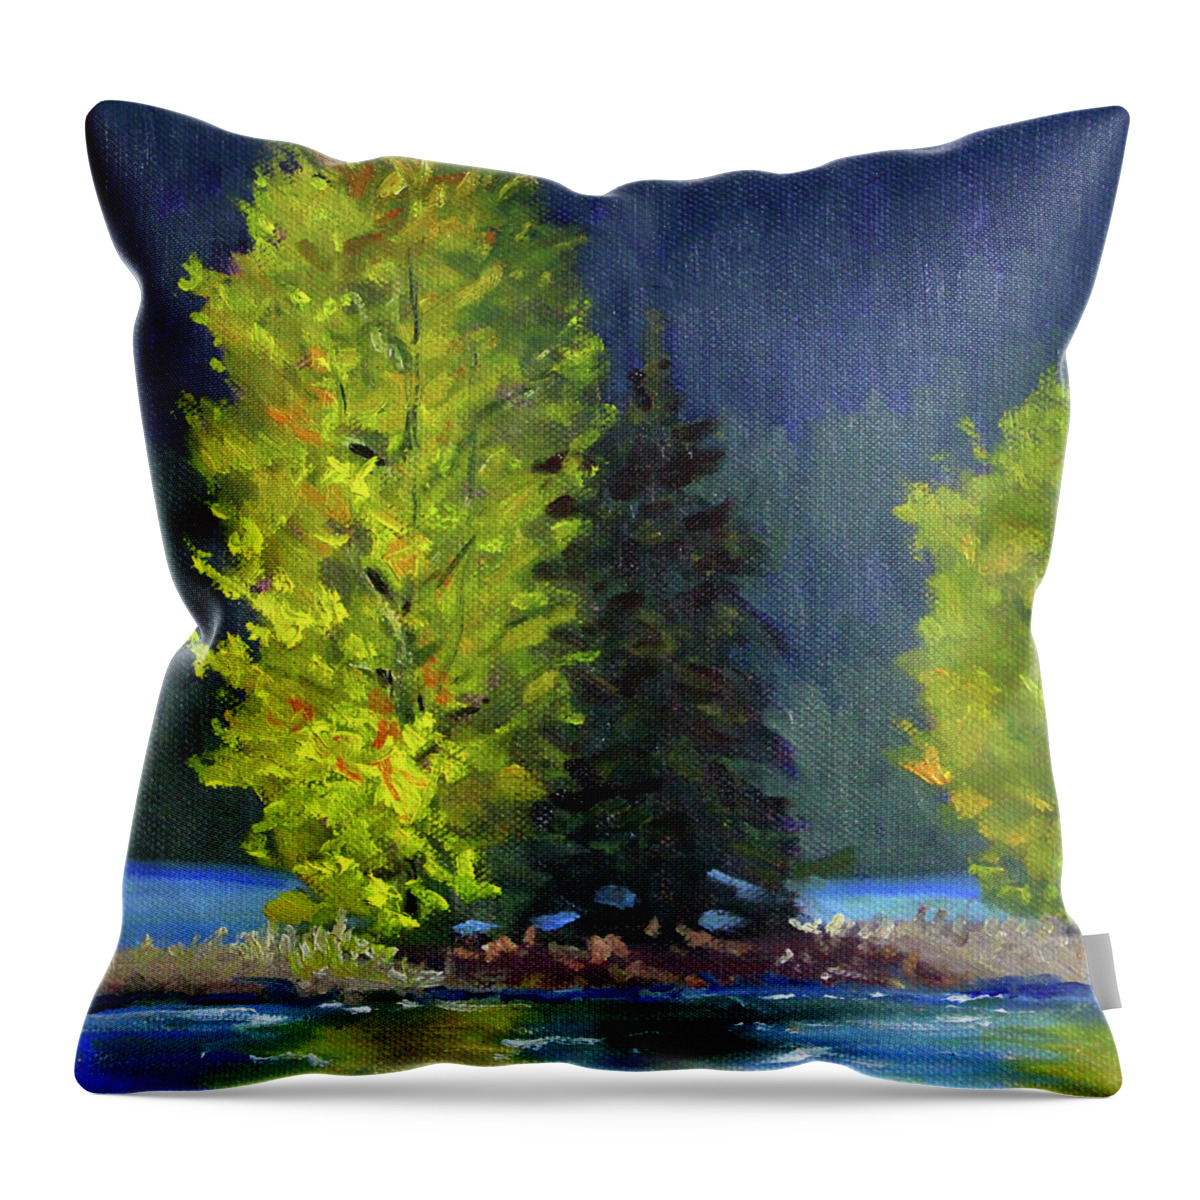 Lake Cushman Throw Pillow featuring the painting Lake Cushman Trees by Nancy Merkle